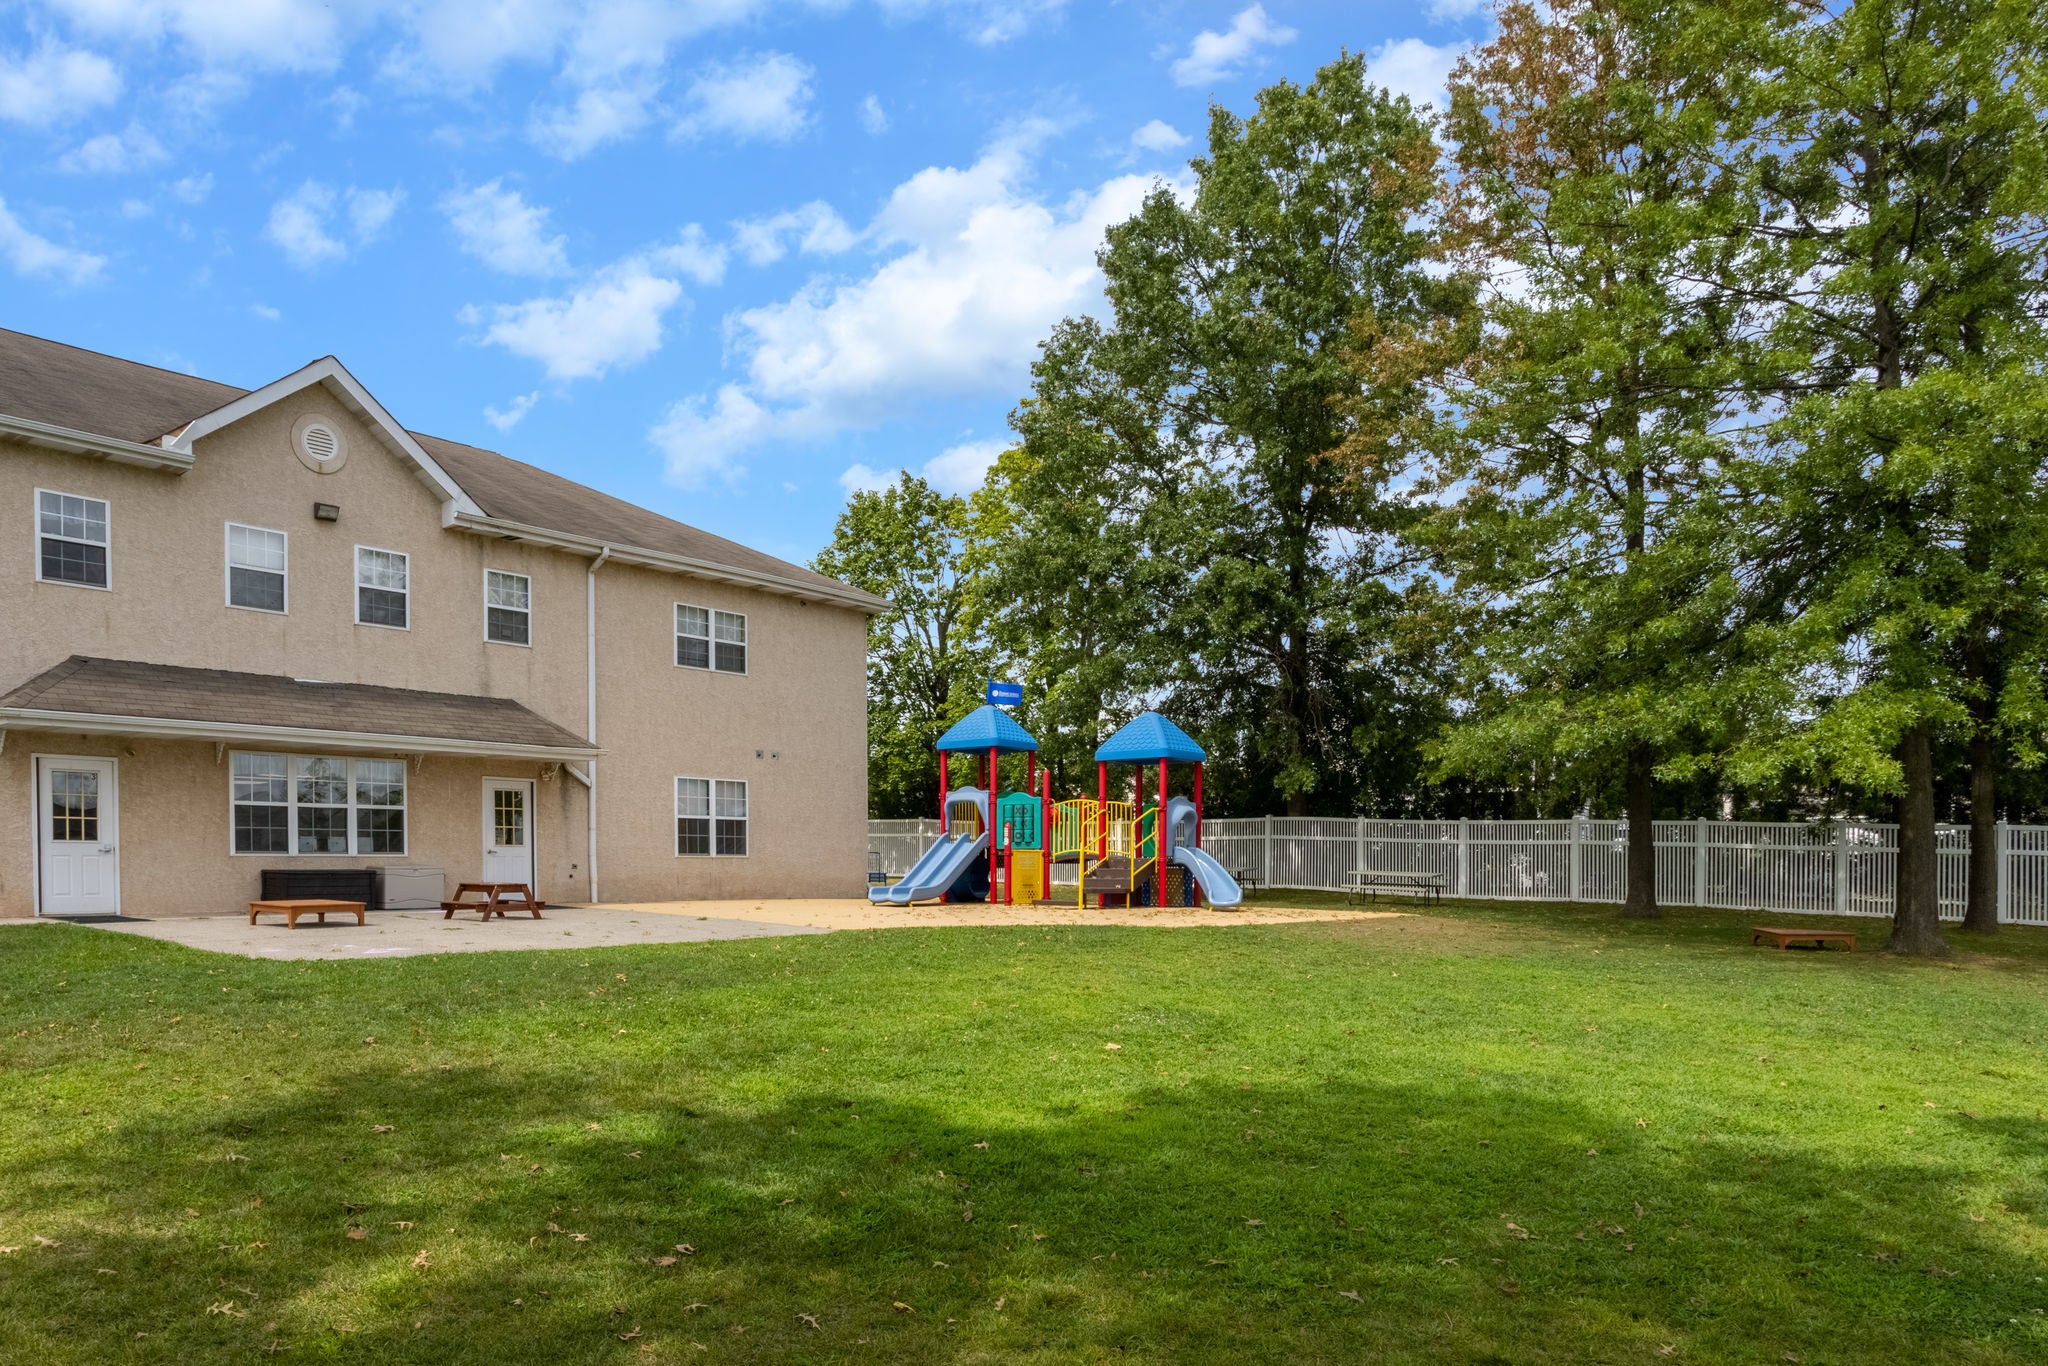 Playground of the Goddard School in Blue Bell Pennsylvania